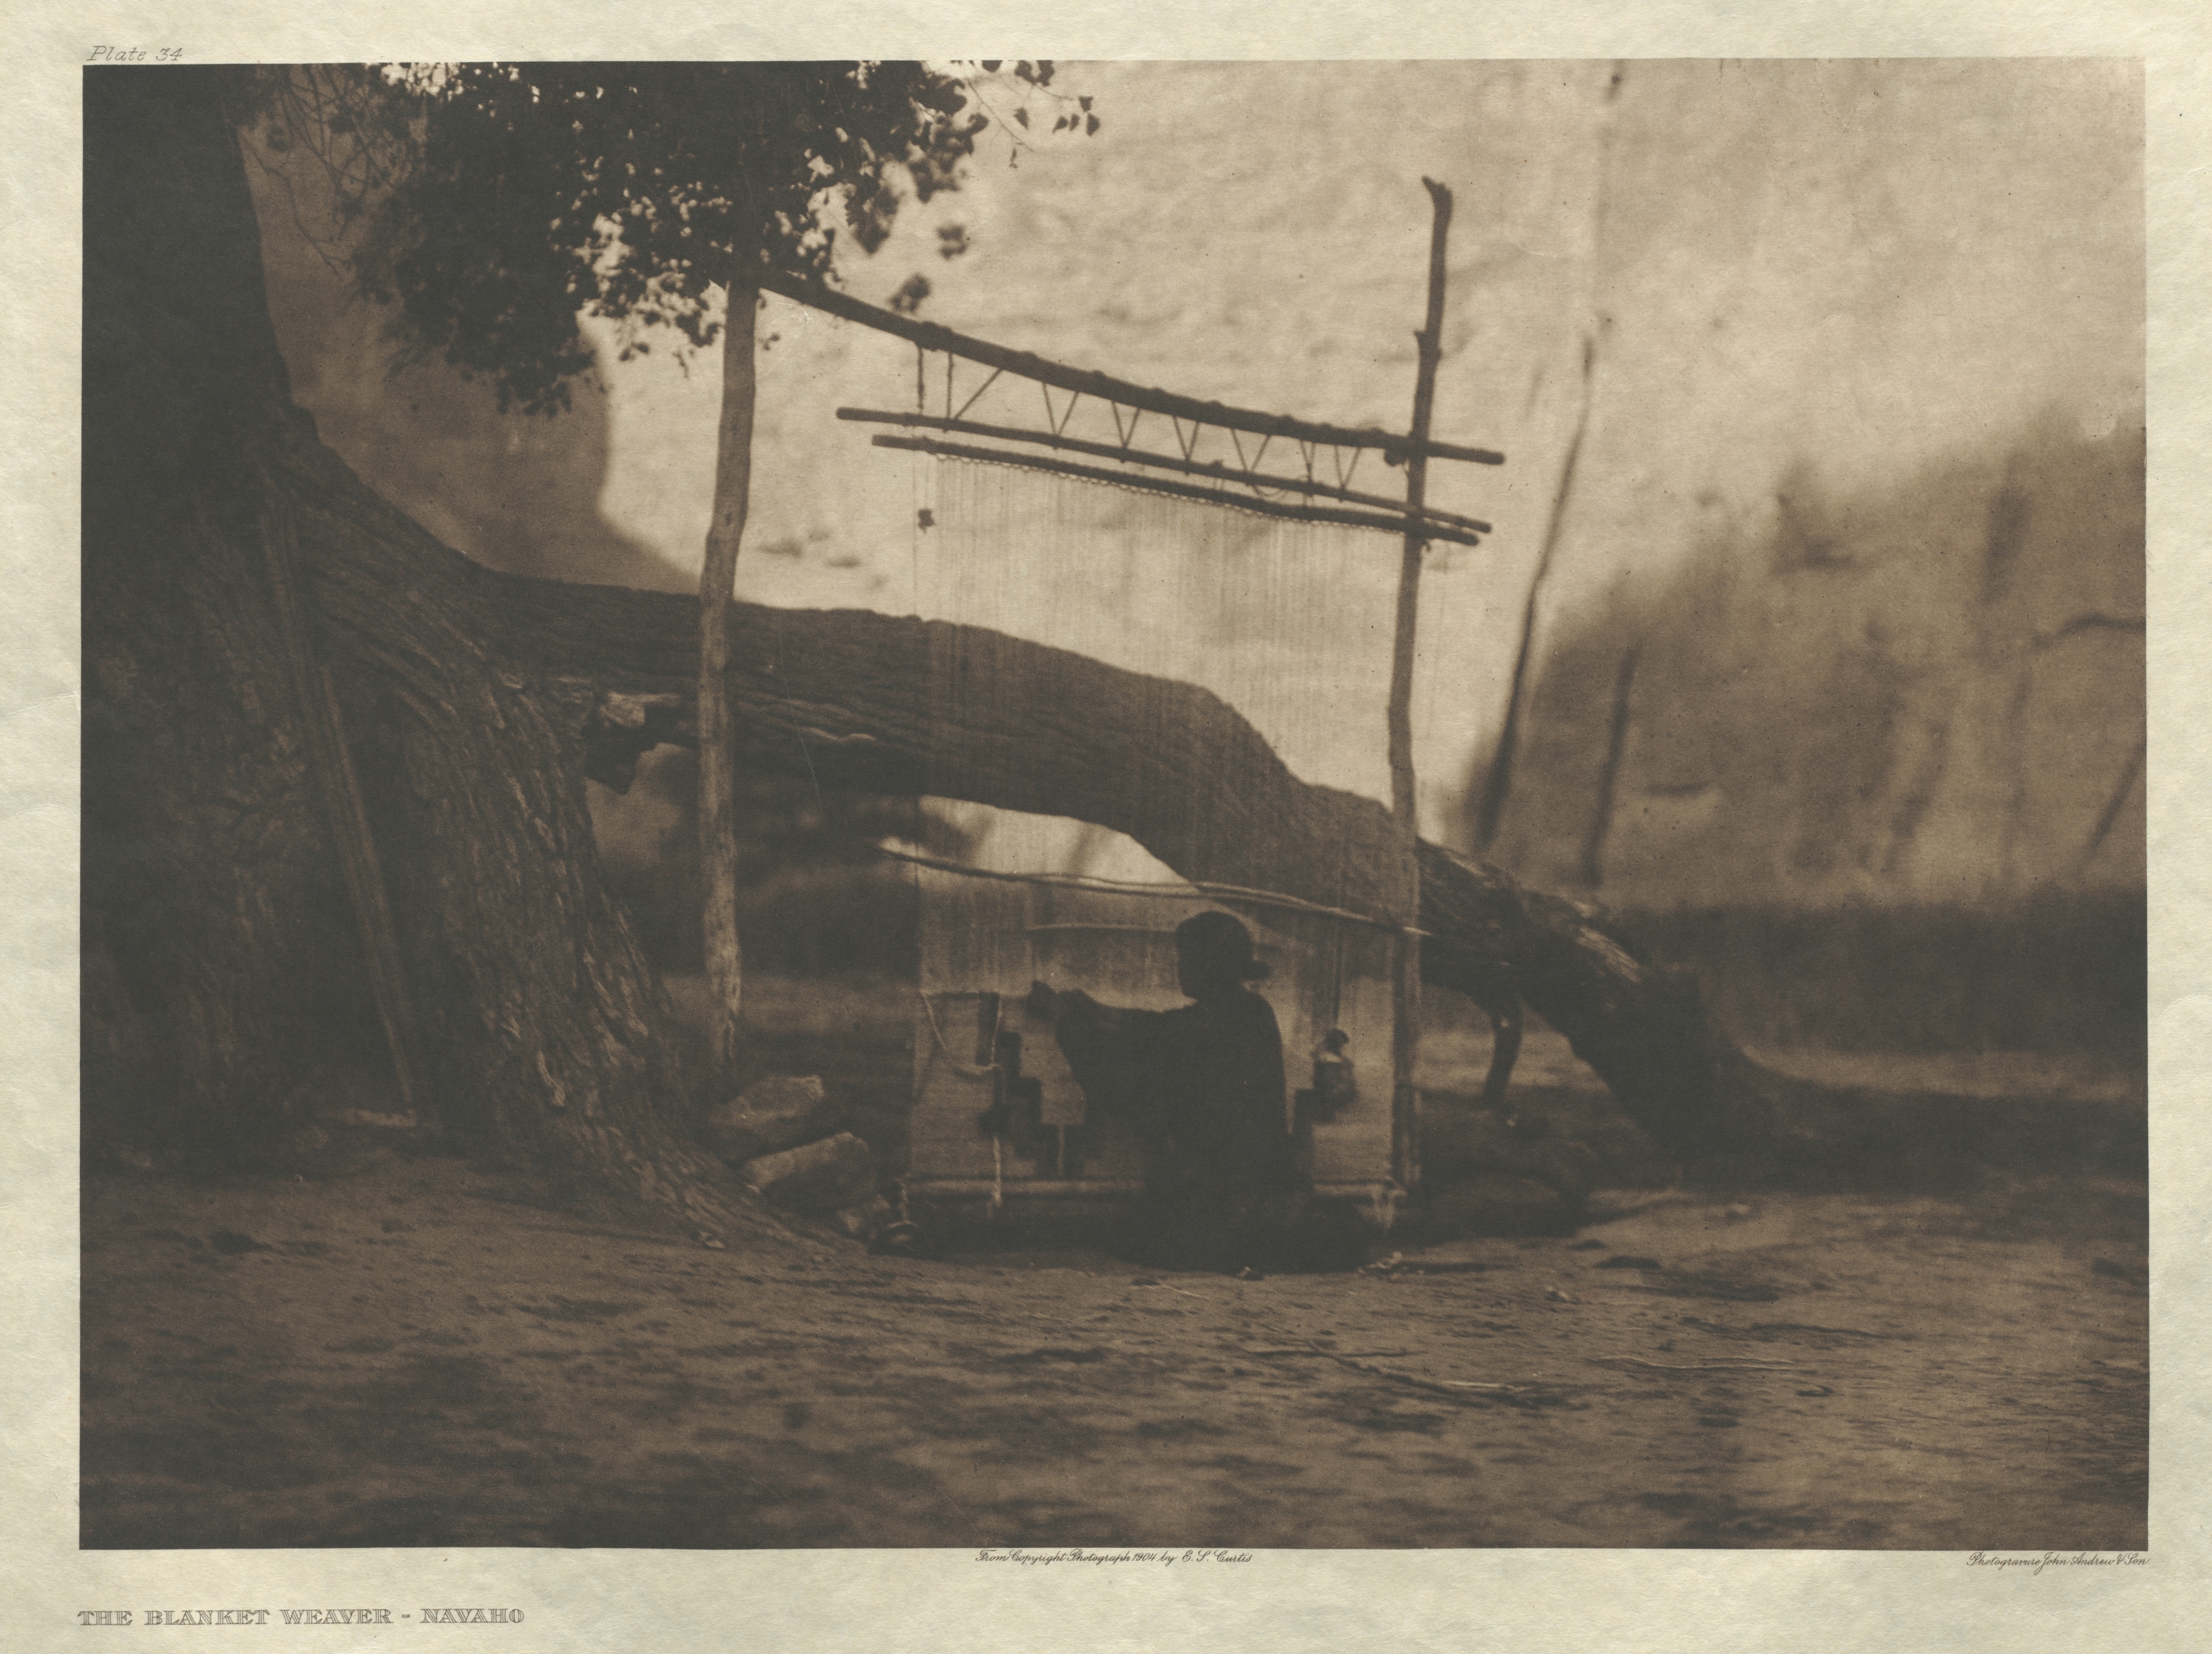 Portfolio I, Plate 34: The Blanket Weaver-Navaho